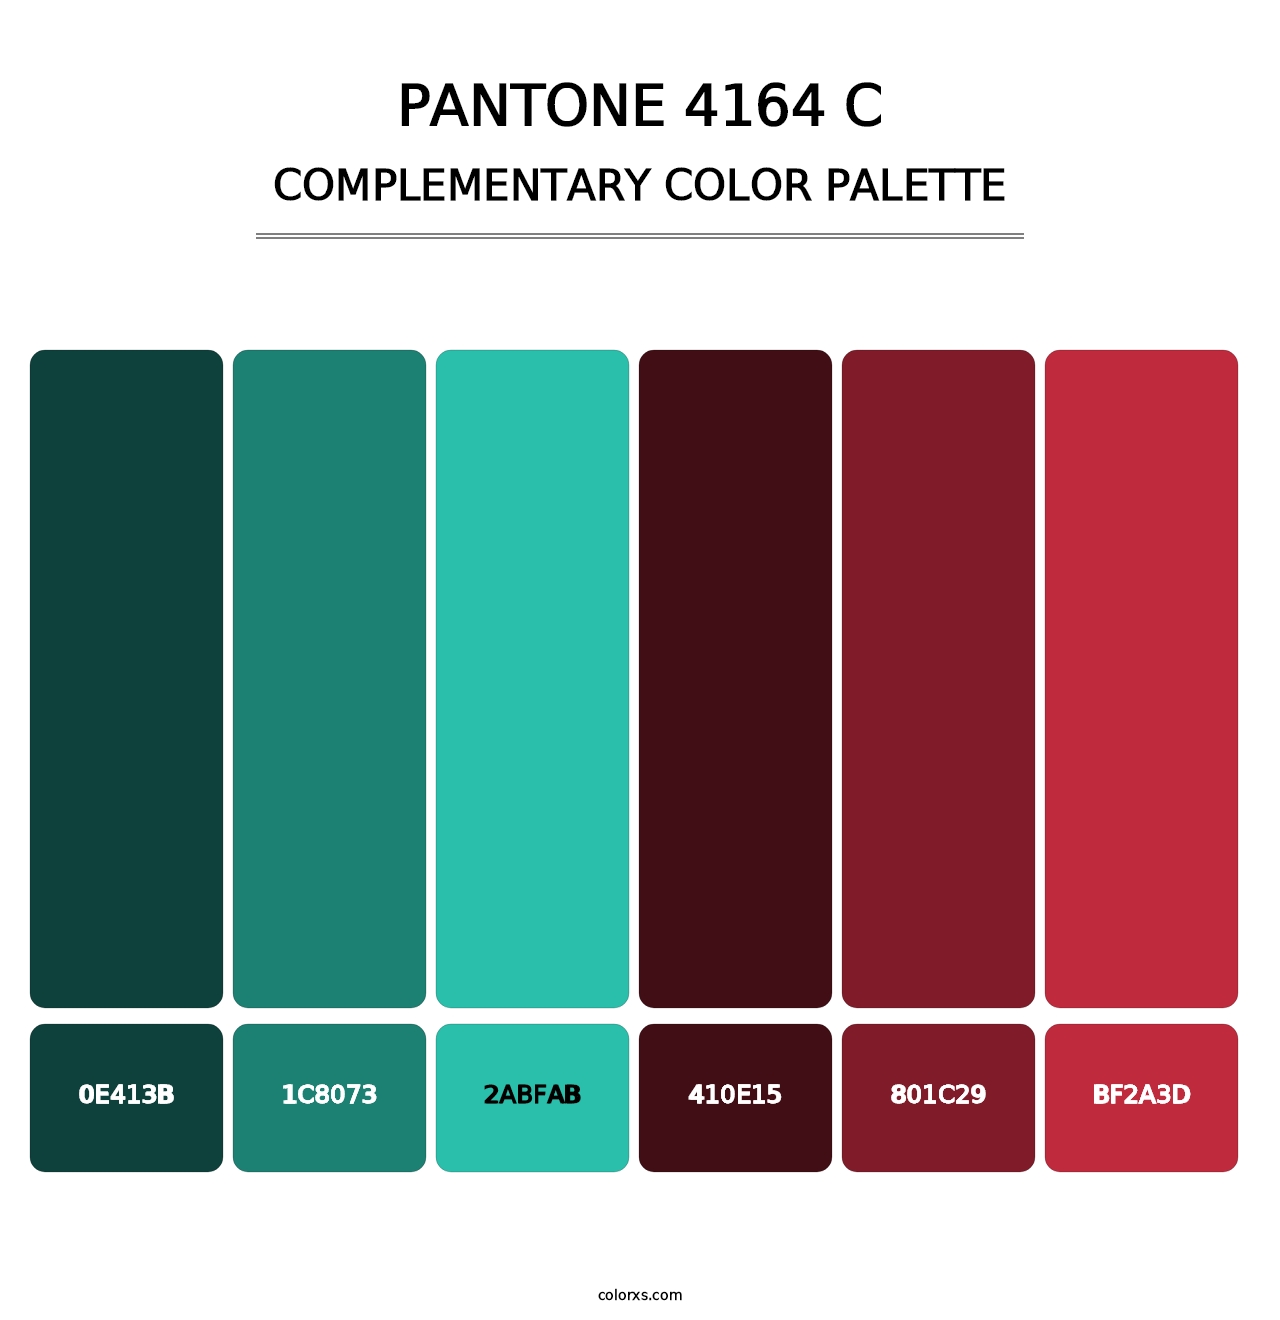 PANTONE 4164 C - Complementary Color Palette